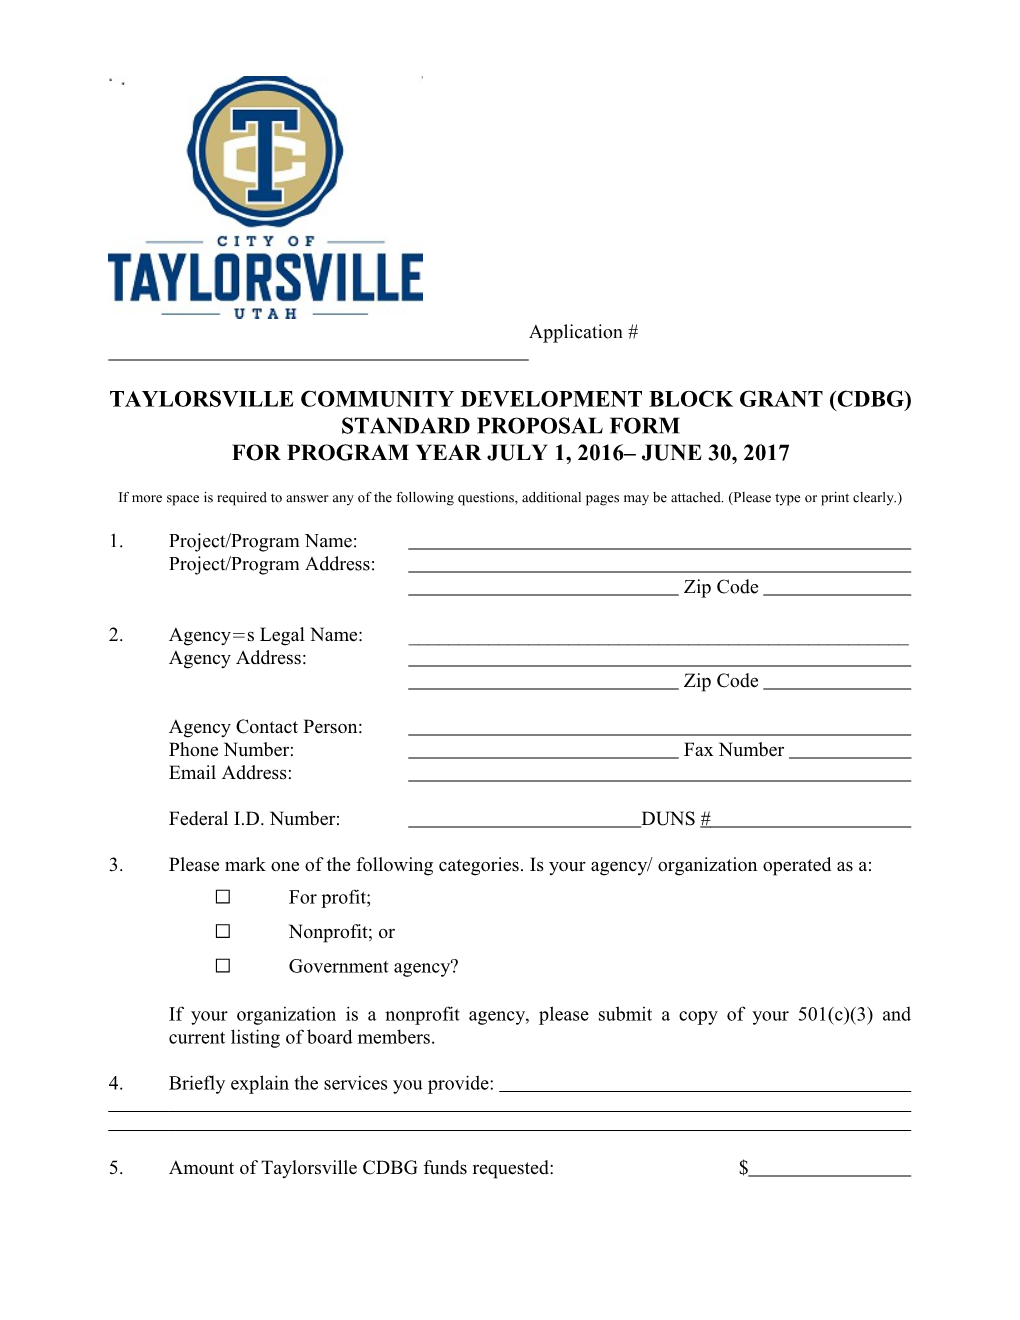 Taylorsville Community Development Block Grant (Cdbg)